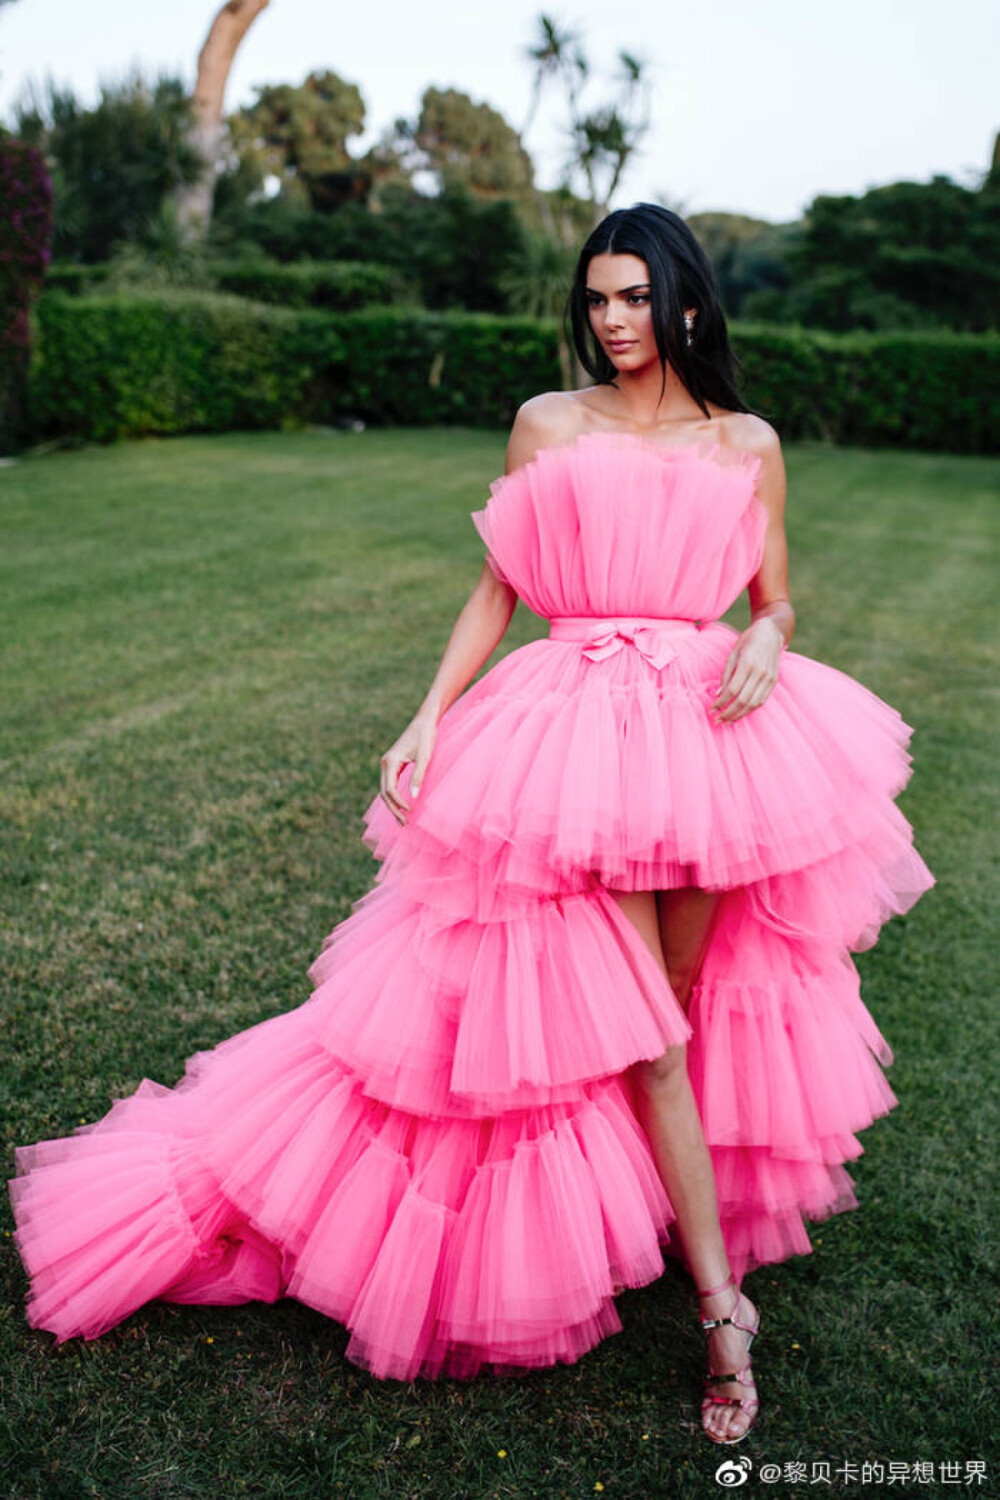 Kendall Jenner一身Giambattista Valli x H&M合作系列粉色长裙出席戛纳电影节amfAR慈善晚宴，看吧，不一定非要白皮才能驾驭粉色。肯豆还和穿同系列合作款的春春合照了[哈哈] ​​​